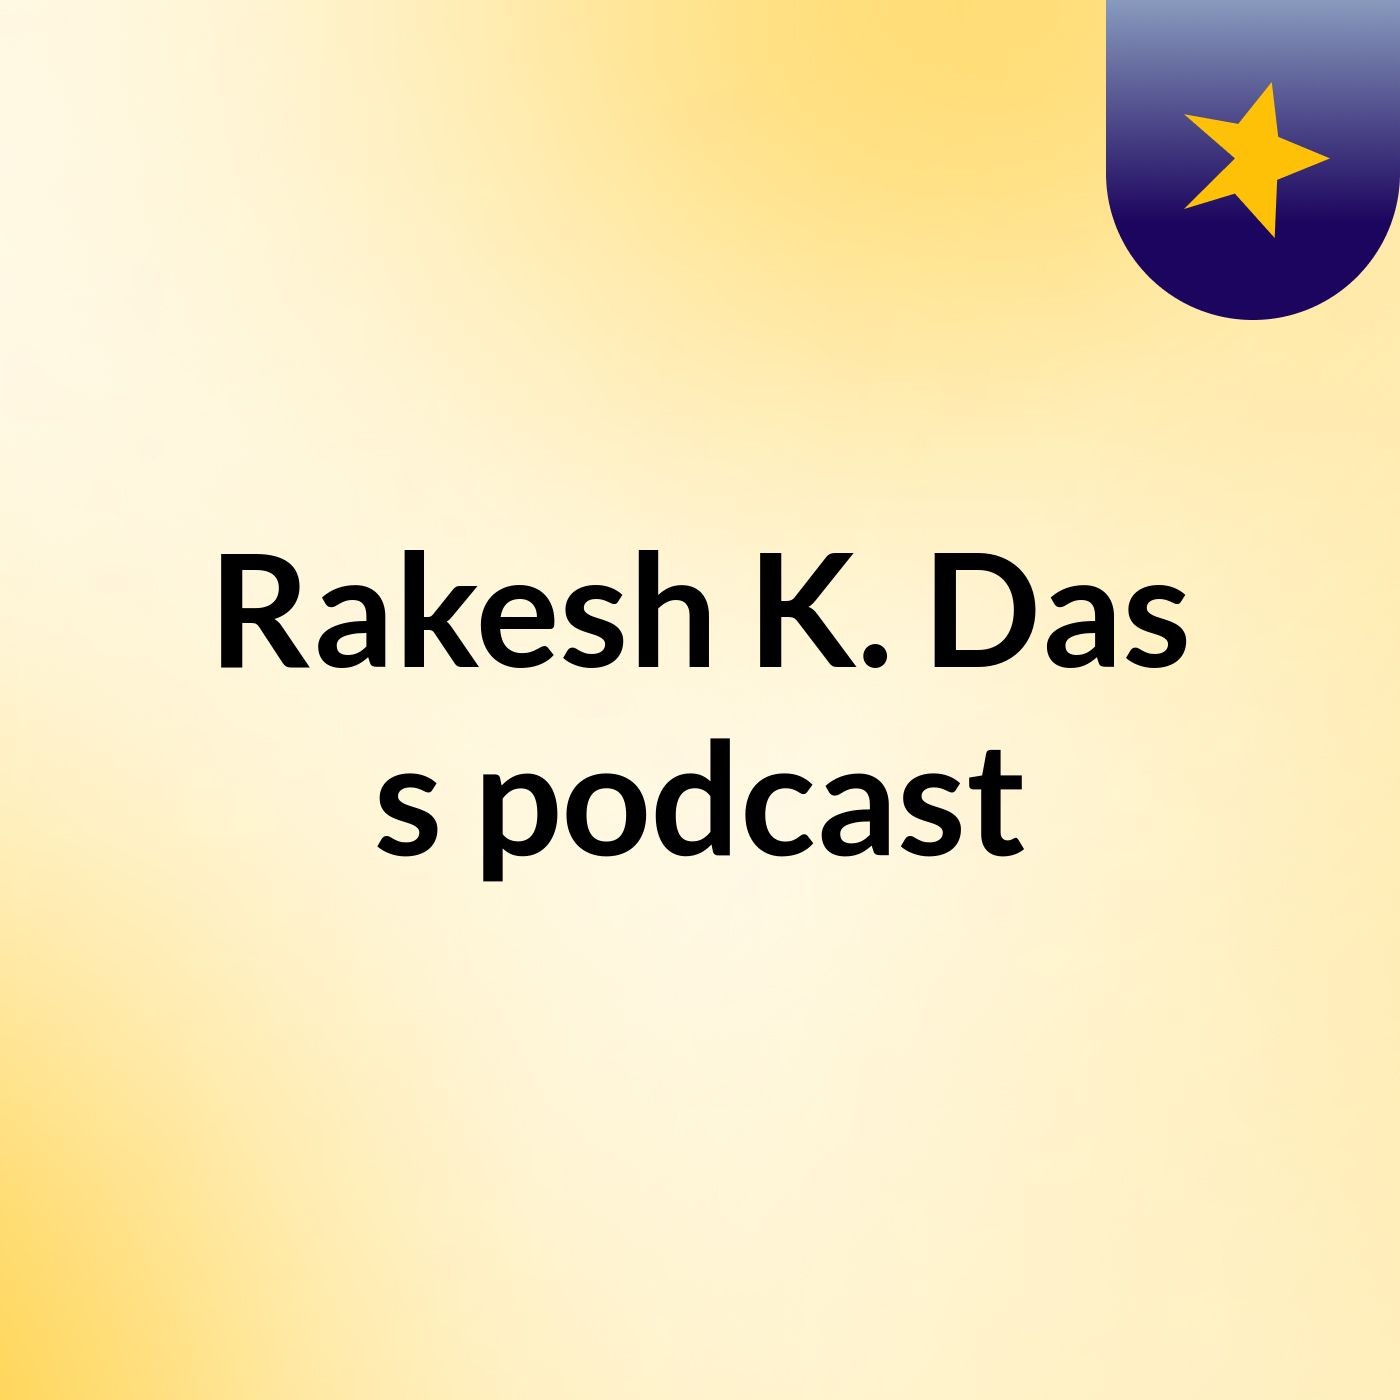 Rakesh K. Das's podcast